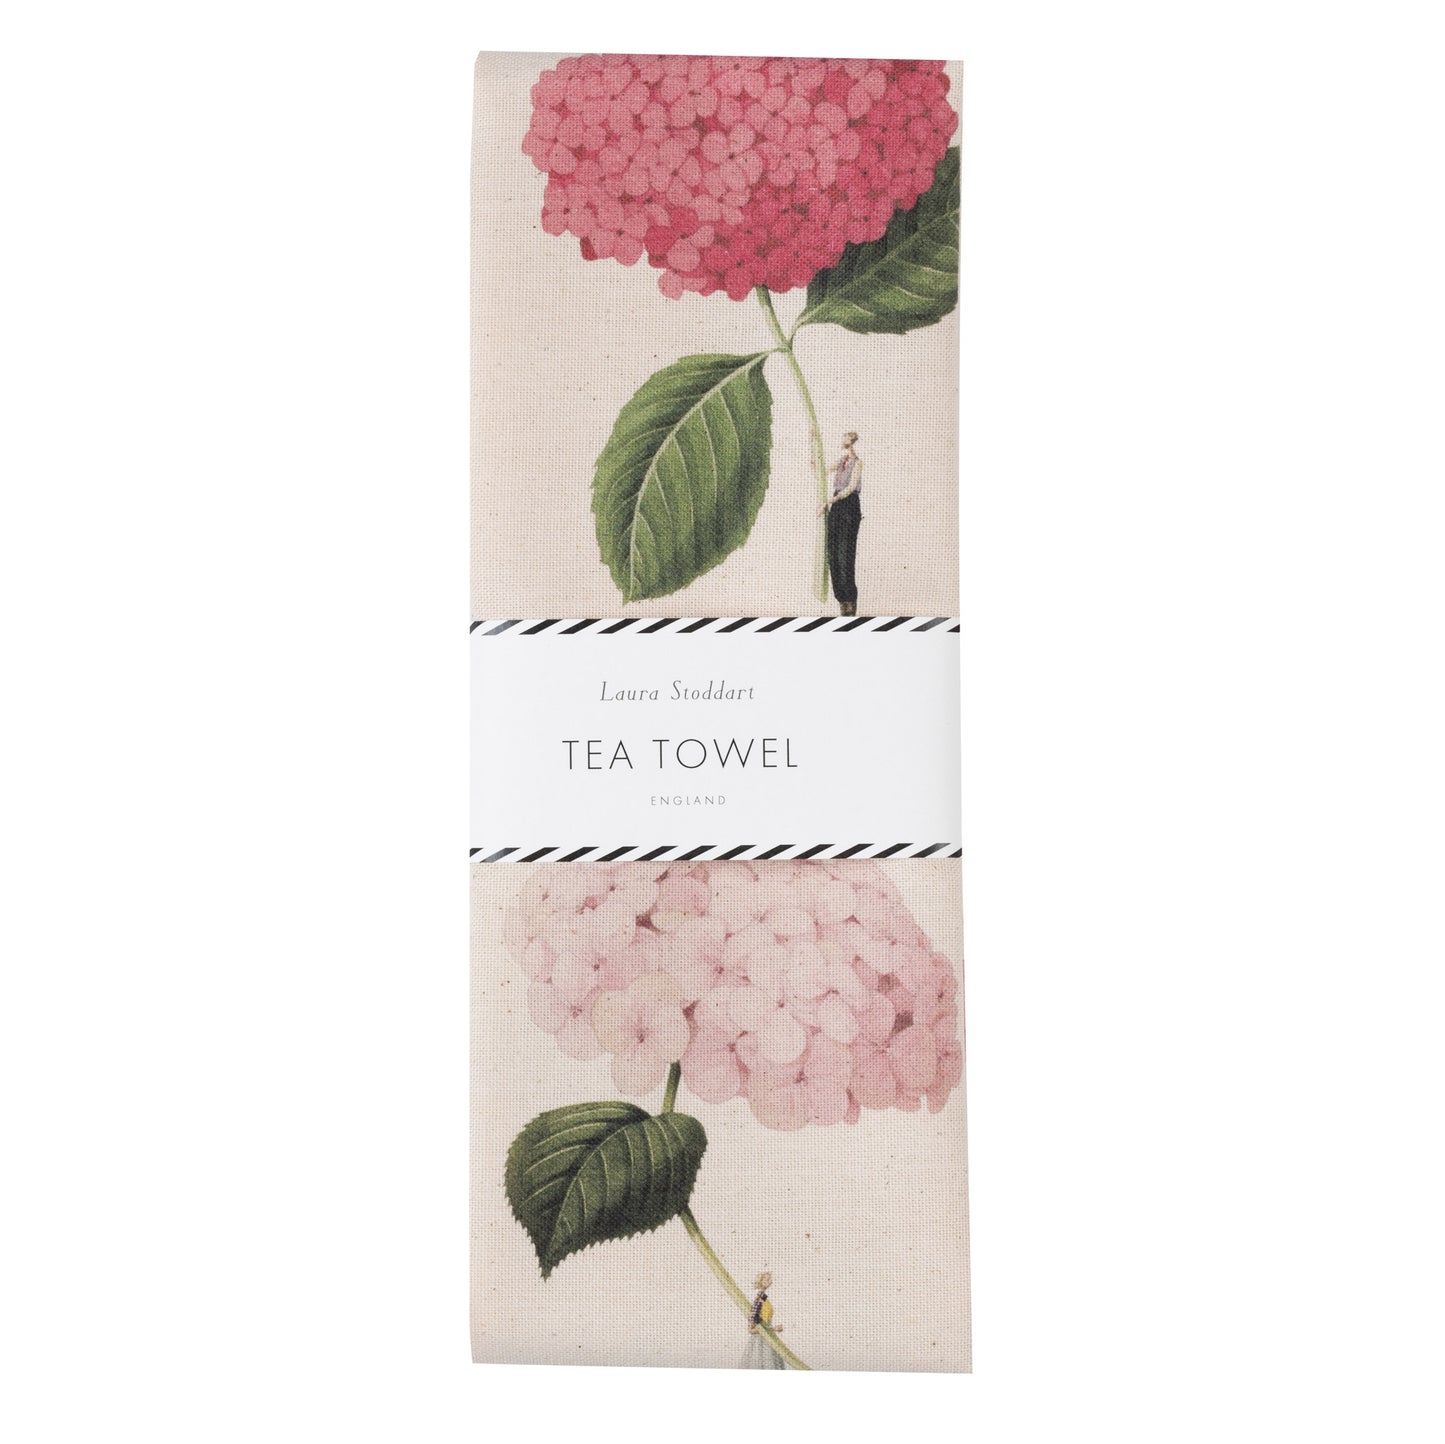 In Bloom Hydrangeas Tea Towel - Pink and Green